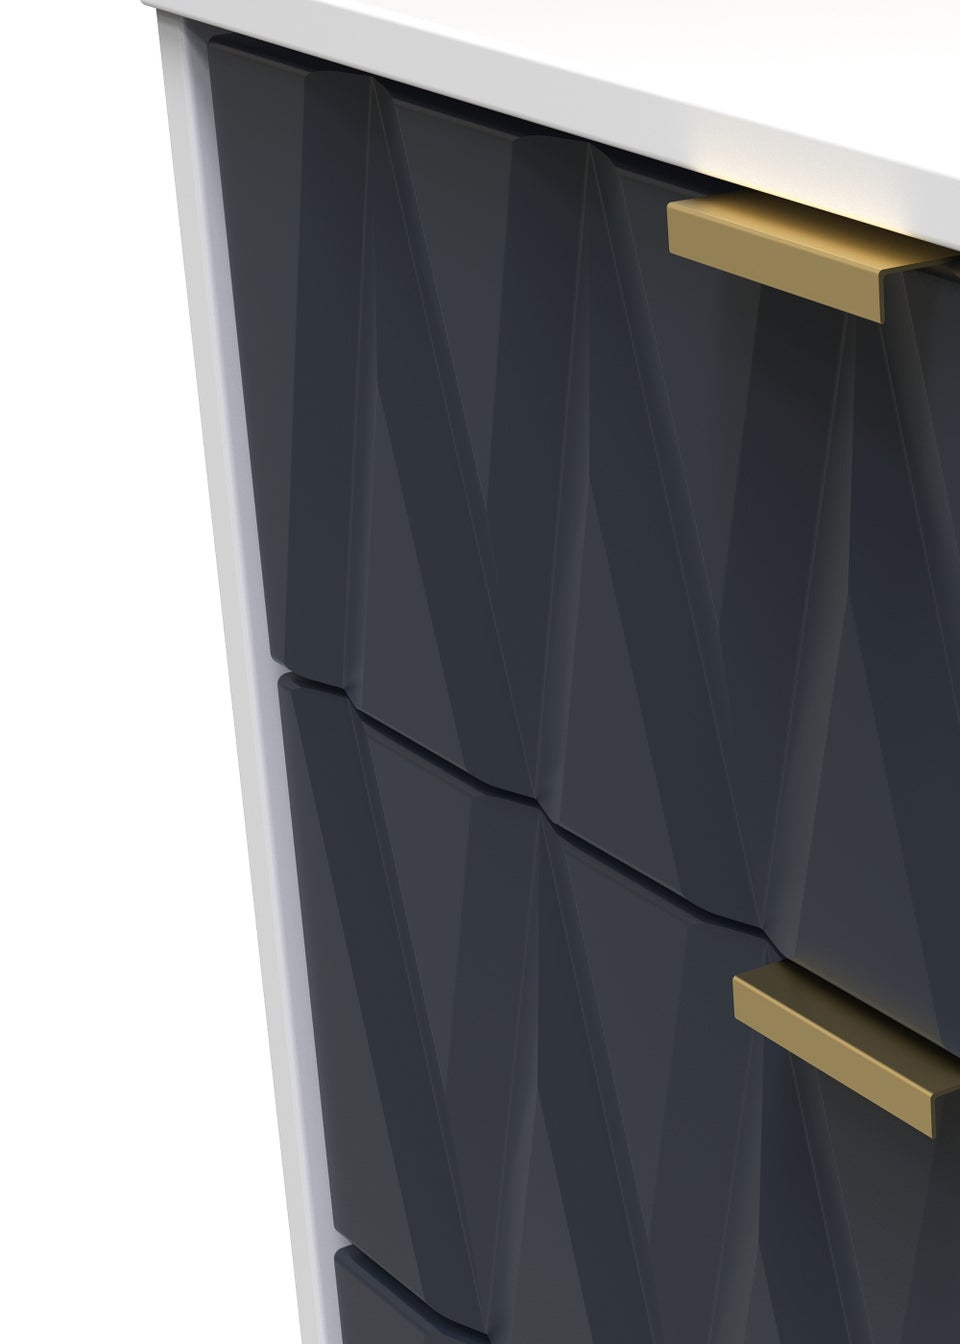 Swift Prism 3 Drawer Midi Chest (74cm x 39.5cm x 57.5cm)